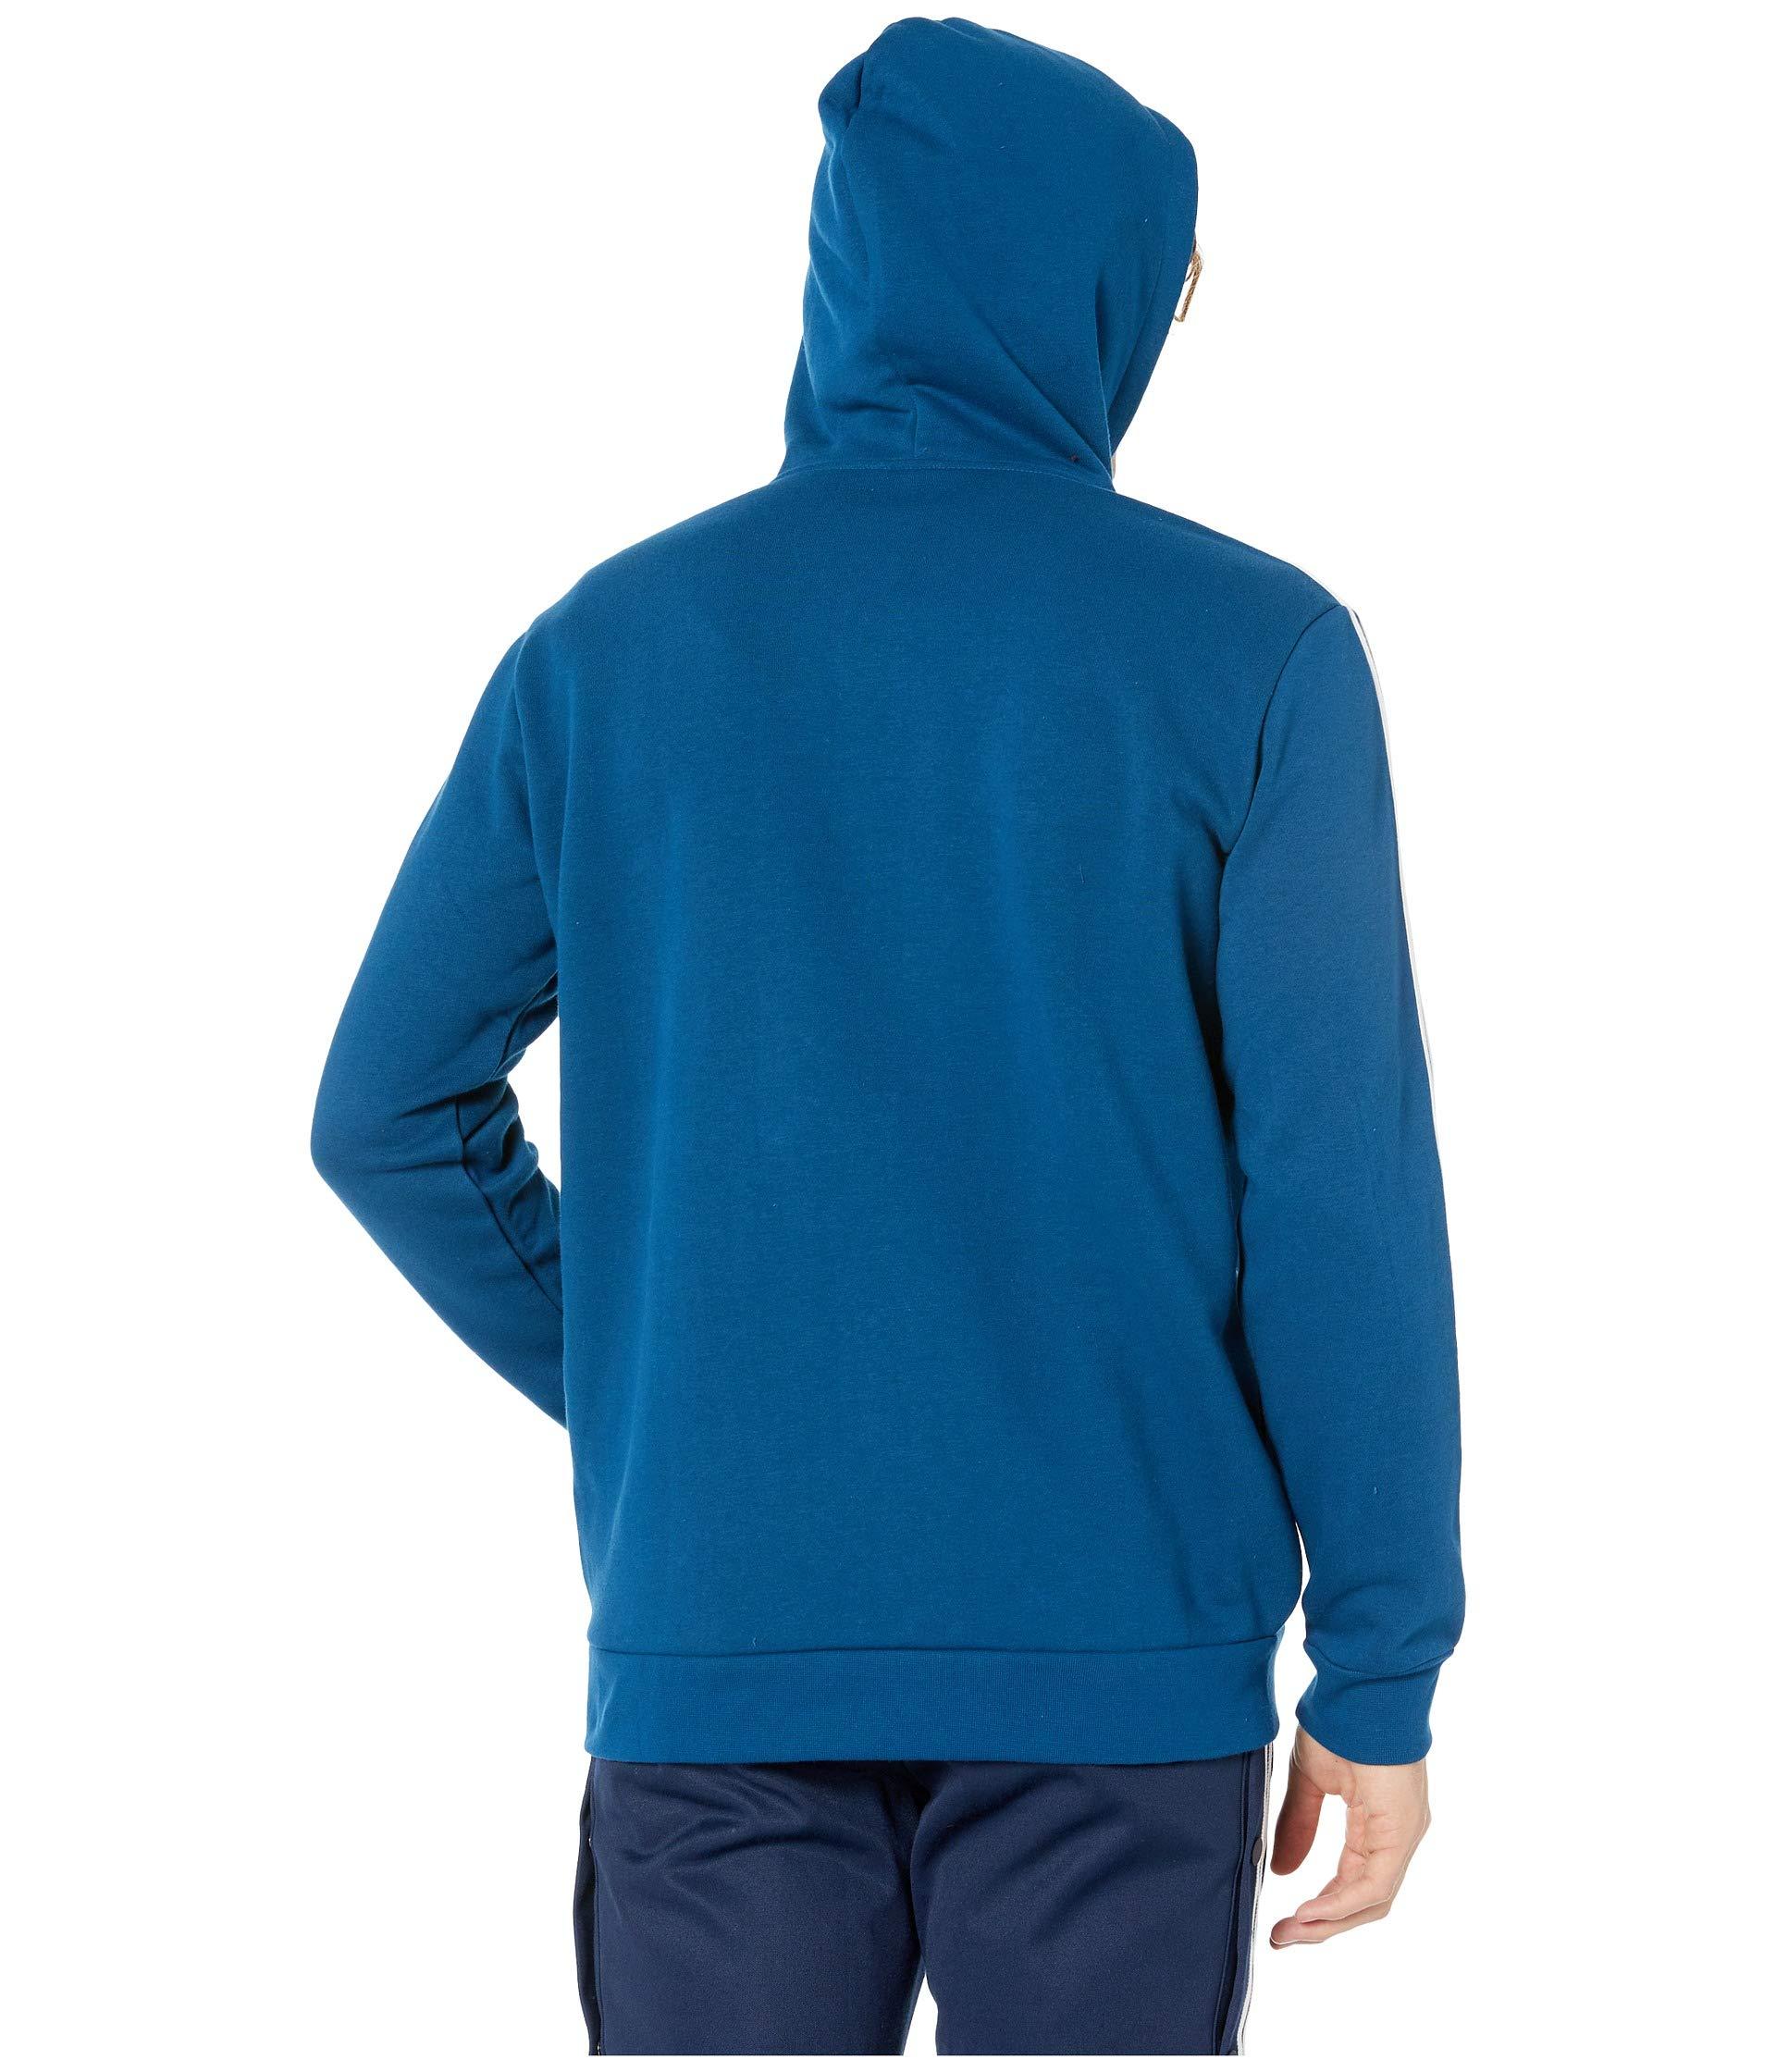 adidas Originals Cotton 3-stripes Full Zip Hoodie in Blue for Men - Lyst